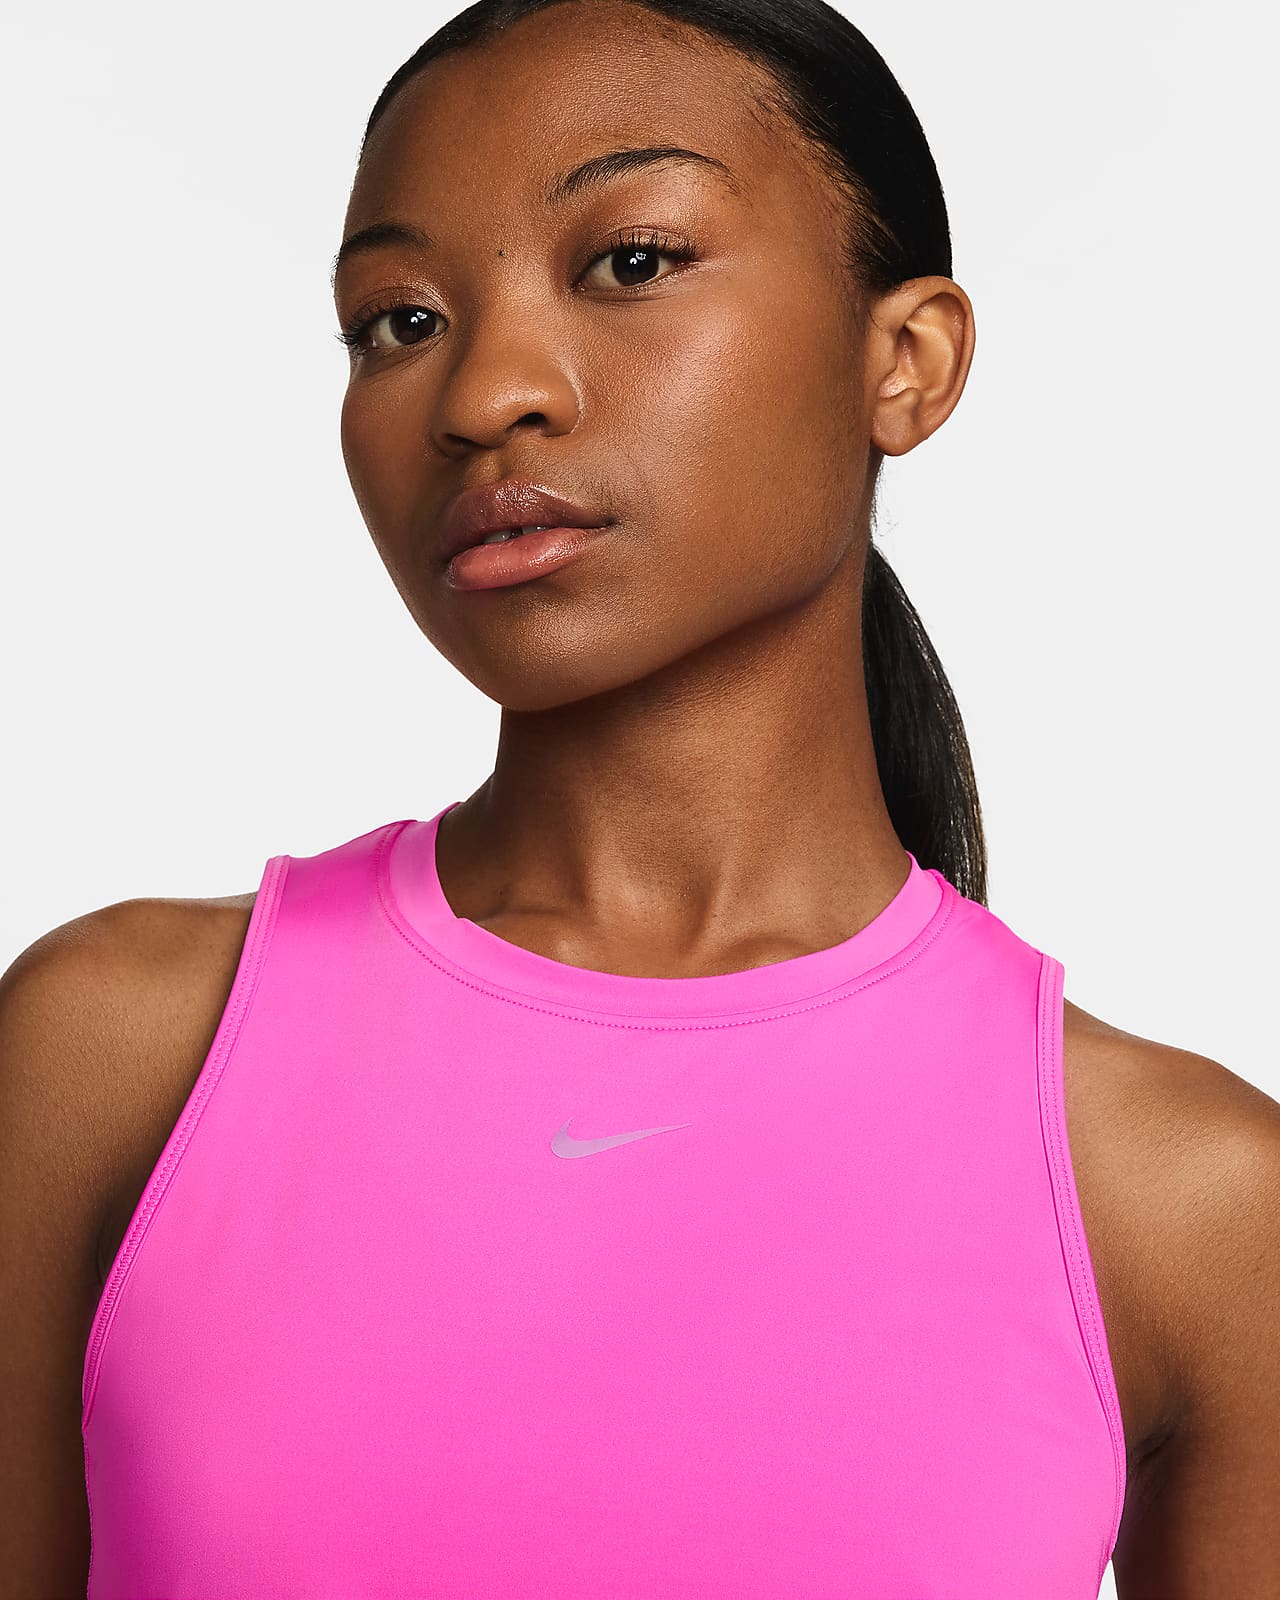 Women's Tank Tops & Sleeveless Tops. Nike IL